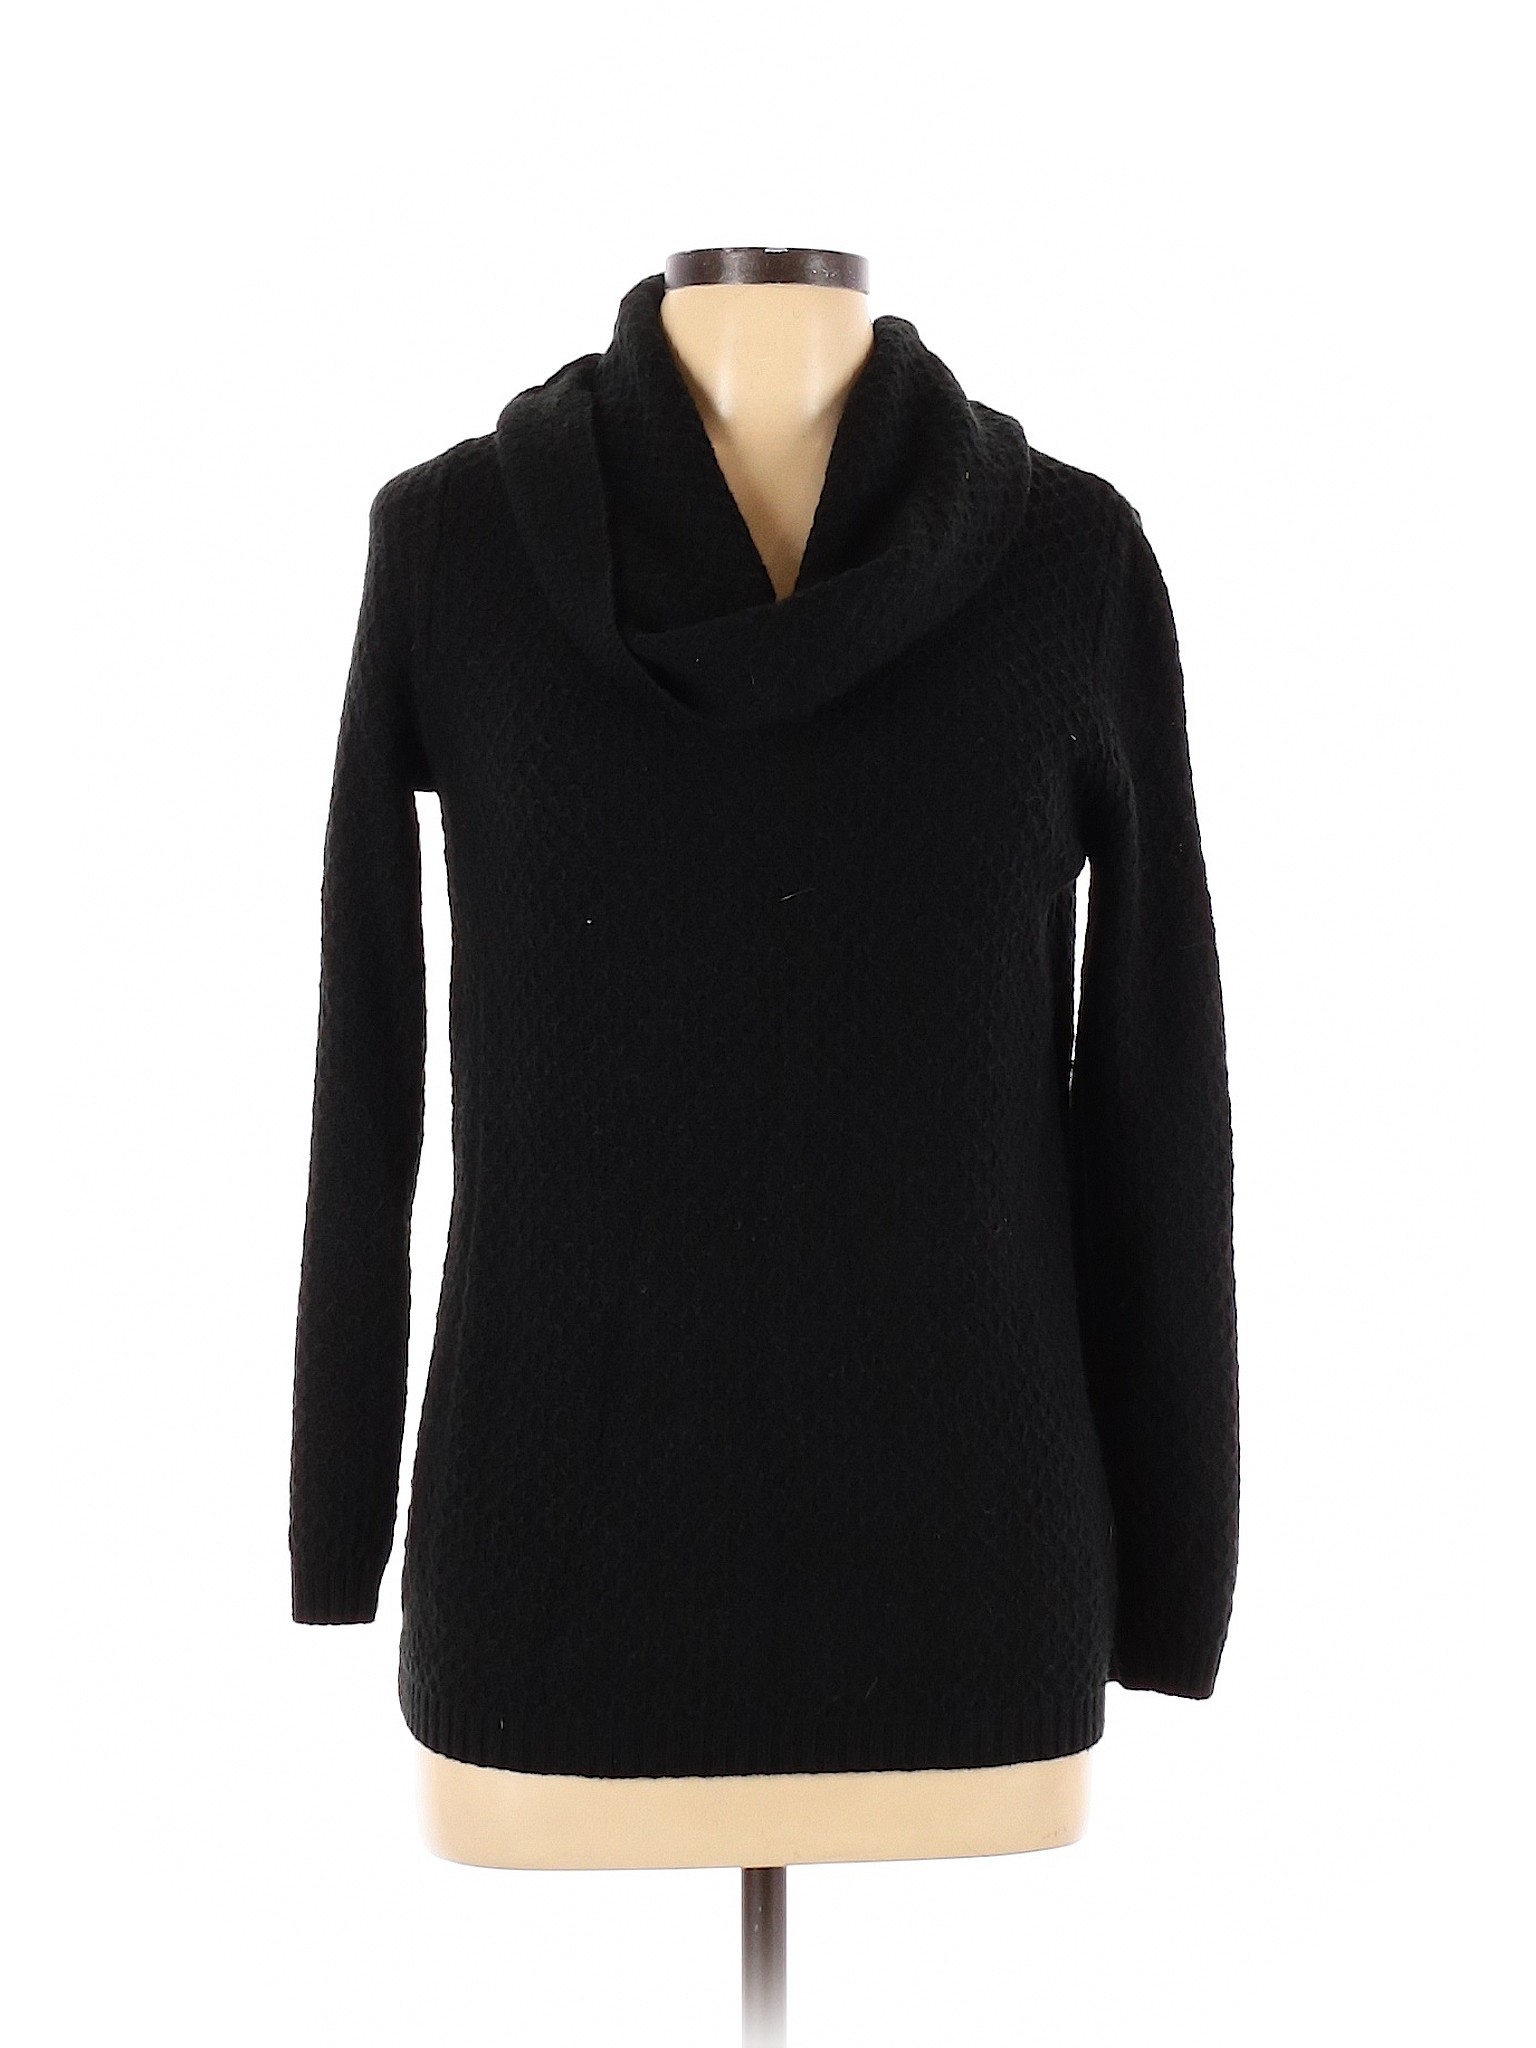 Merona Women Black Pullover Sweater L | eBay